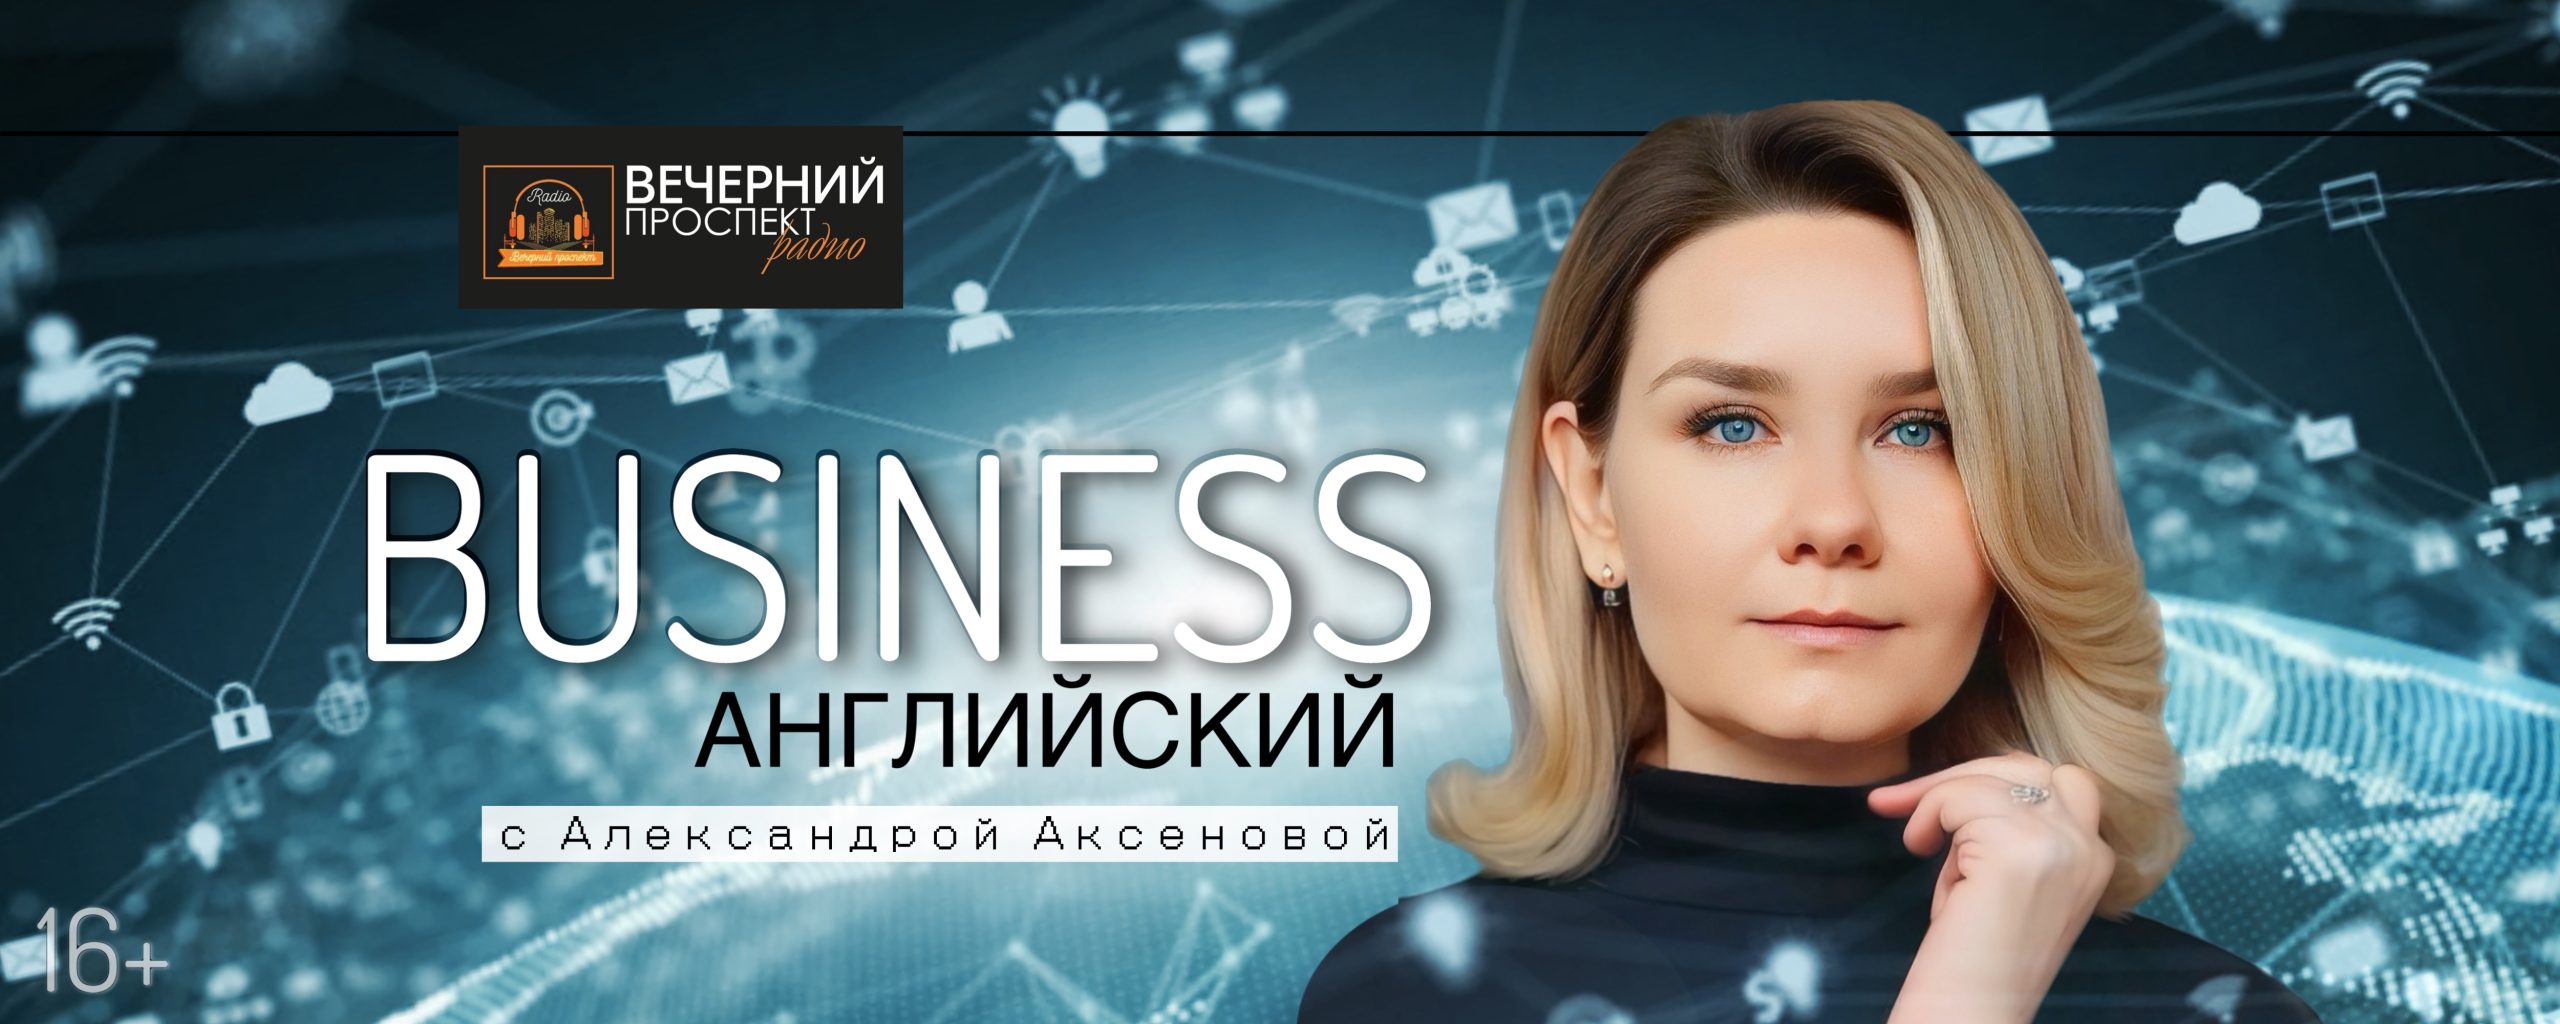 12 апреля с 16:00 до 17:00 программа «Бизнес – английский на Вечернем Проспекте» с Александрой Аксеновой.